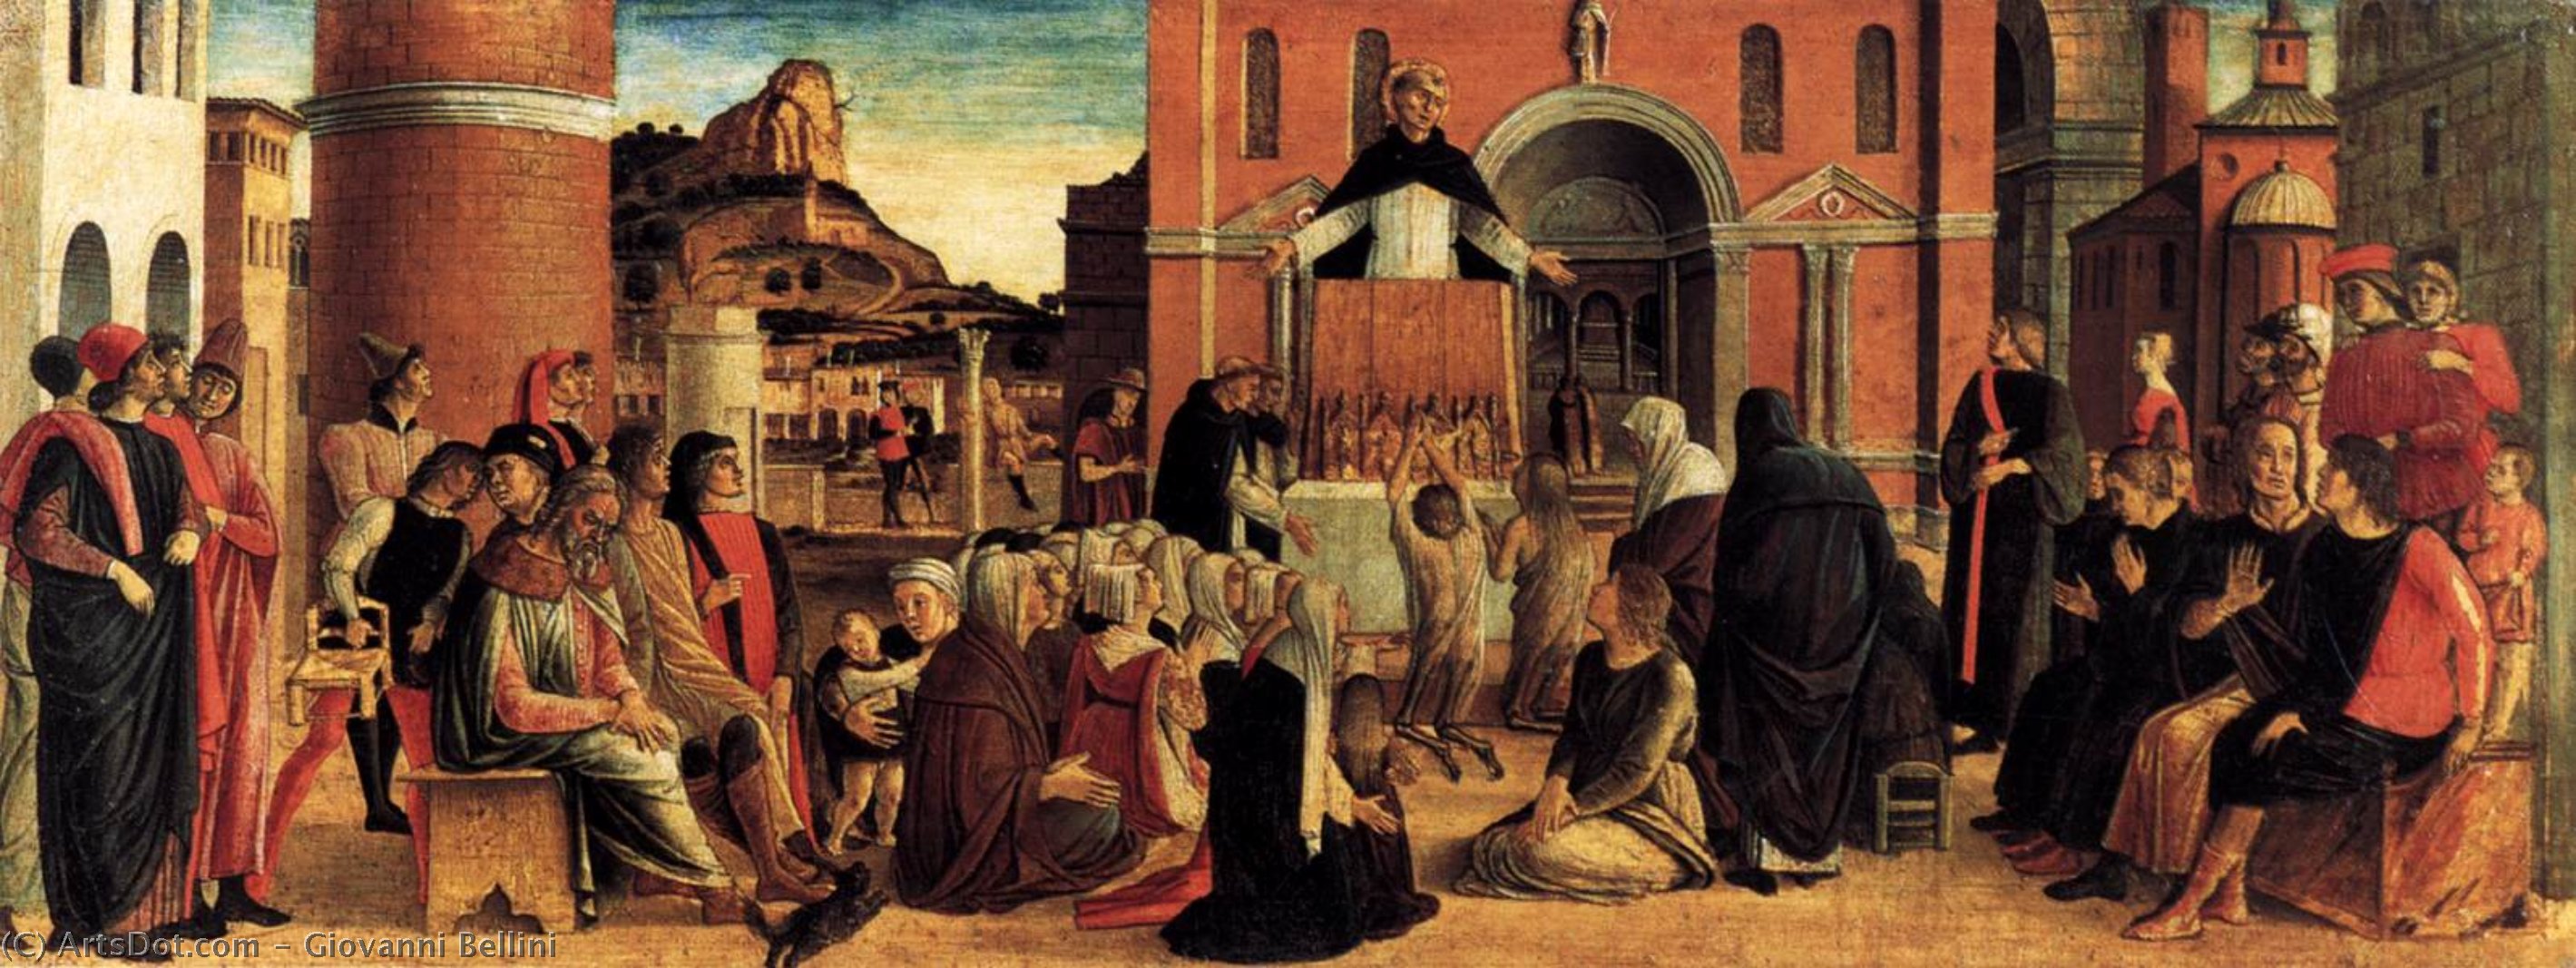 顺序 手工油畫 圣文森佐的波利普蒂奇 费雷里 (predella), 1464 通过 Giovanni Bellini (1433-1516, Italy) | ArtsDot.com